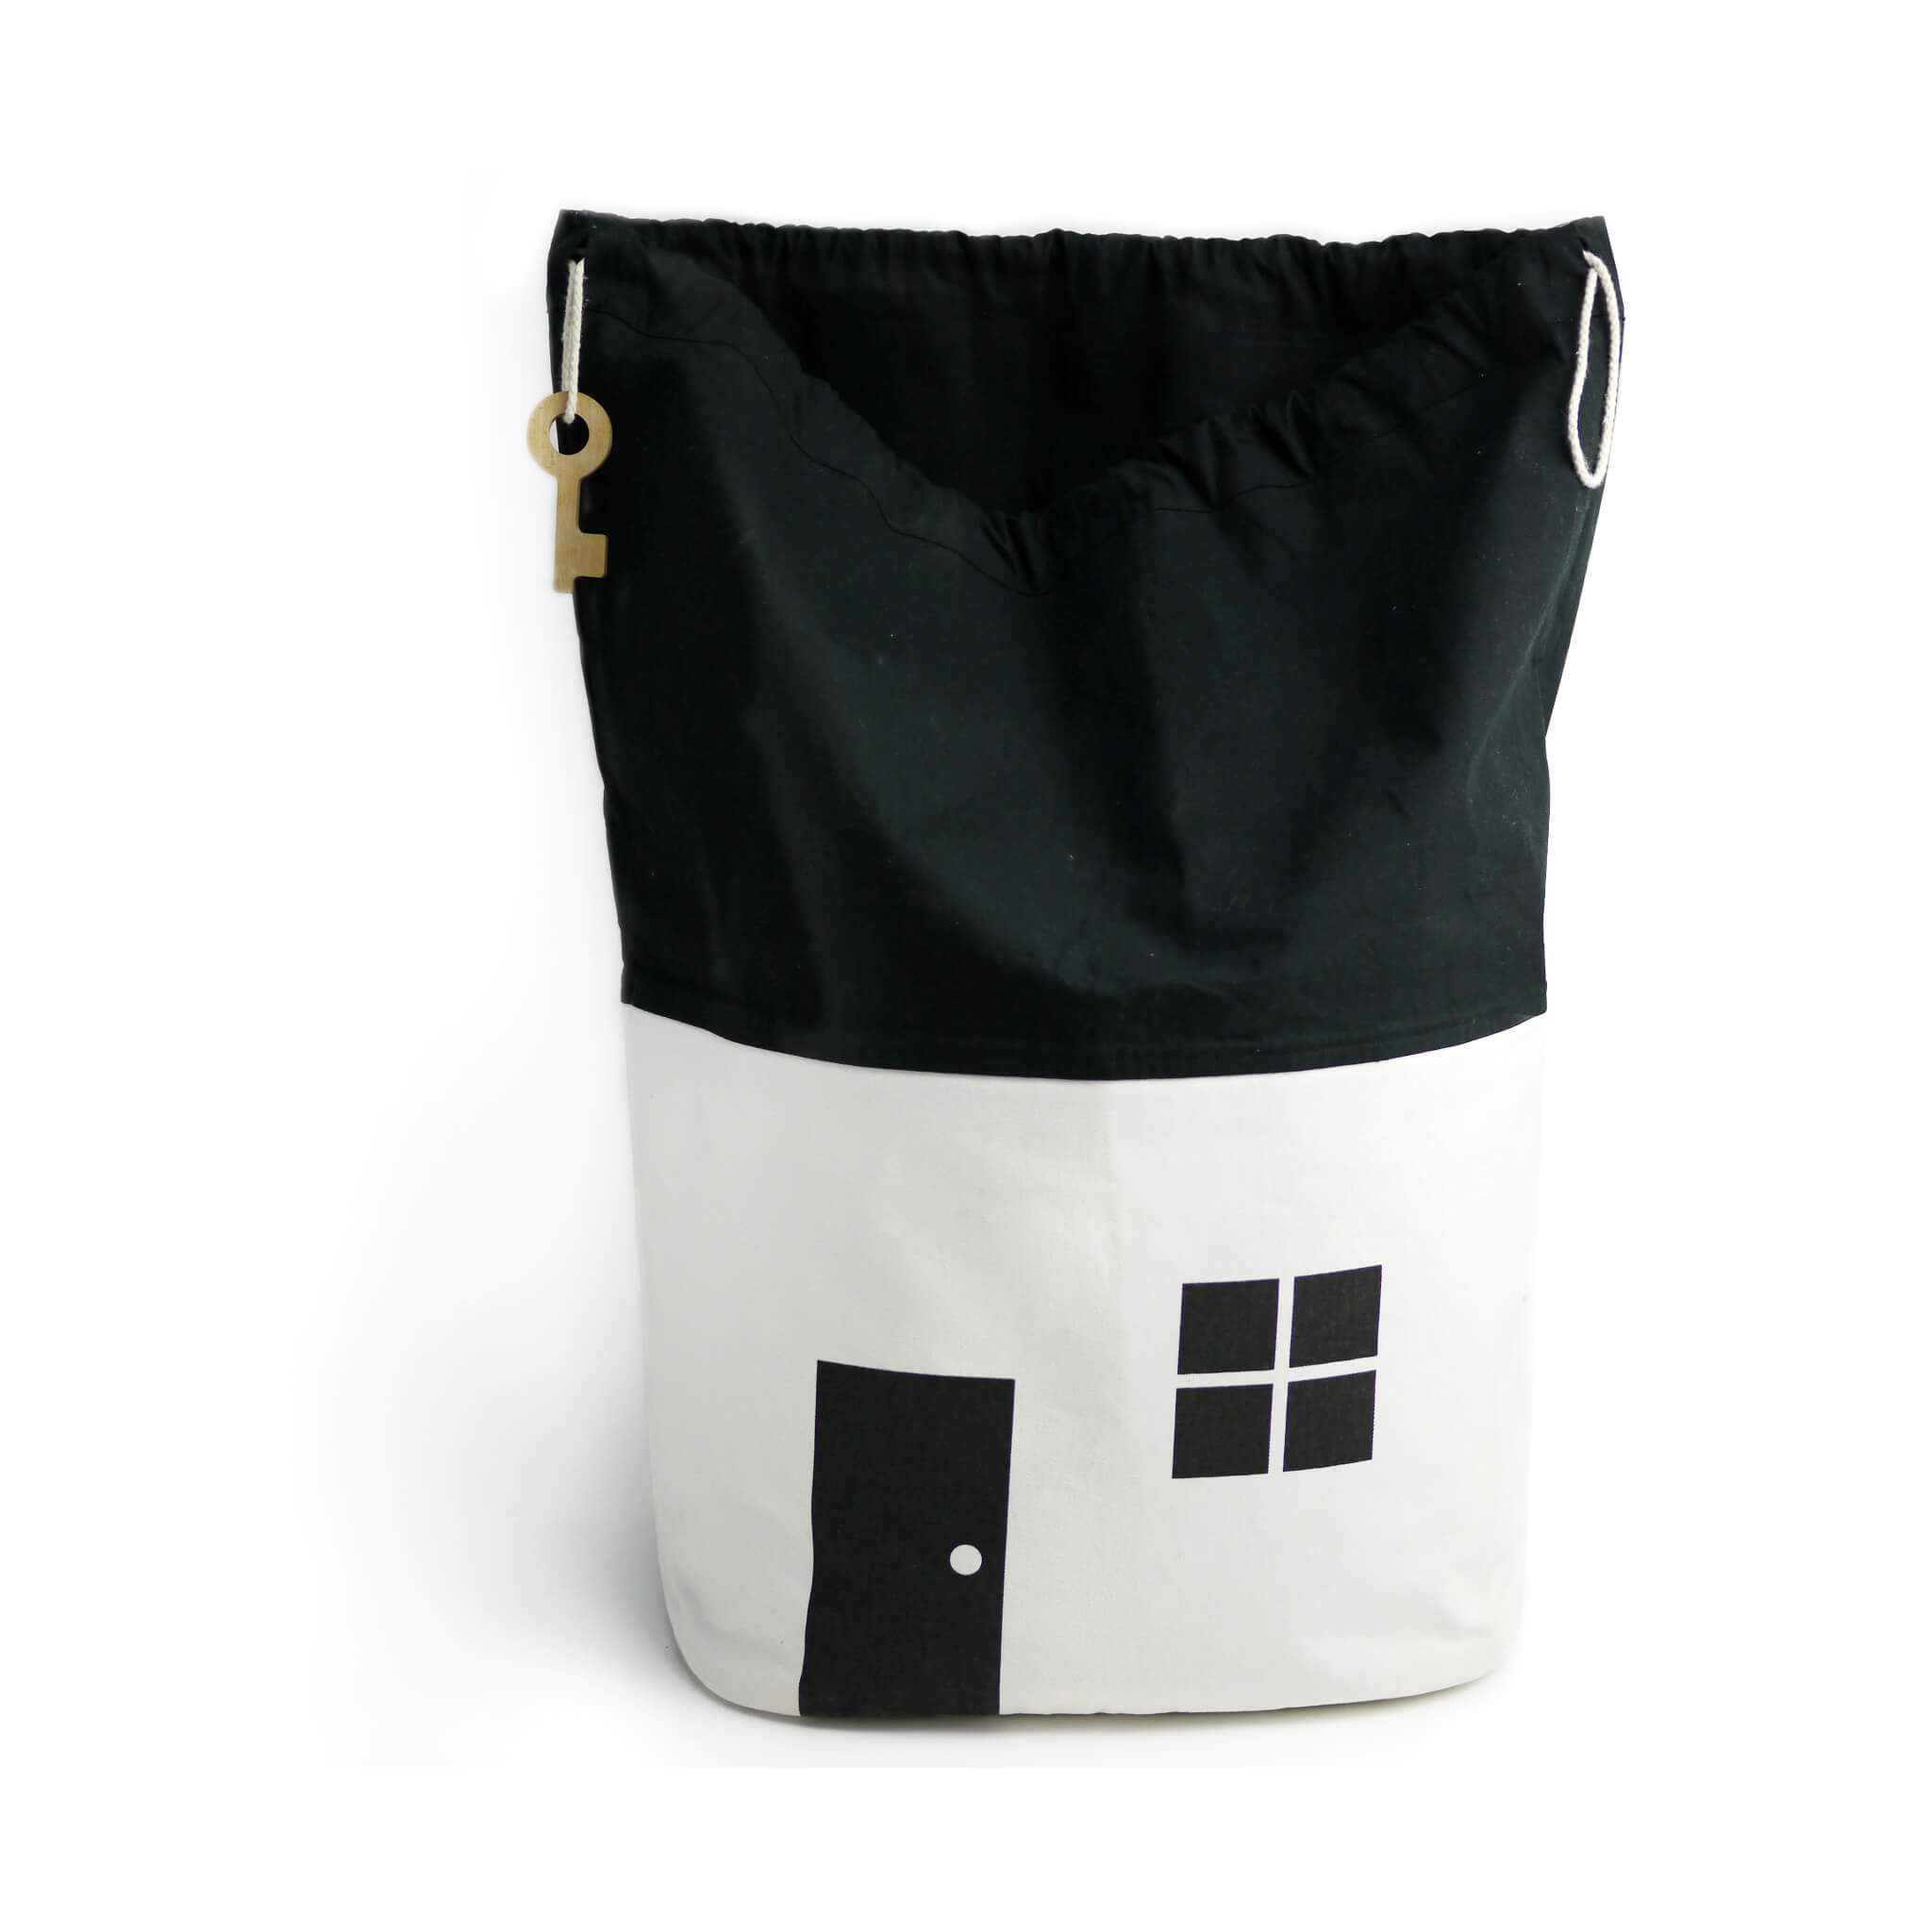 House Storage Bag - Black/White - Medium